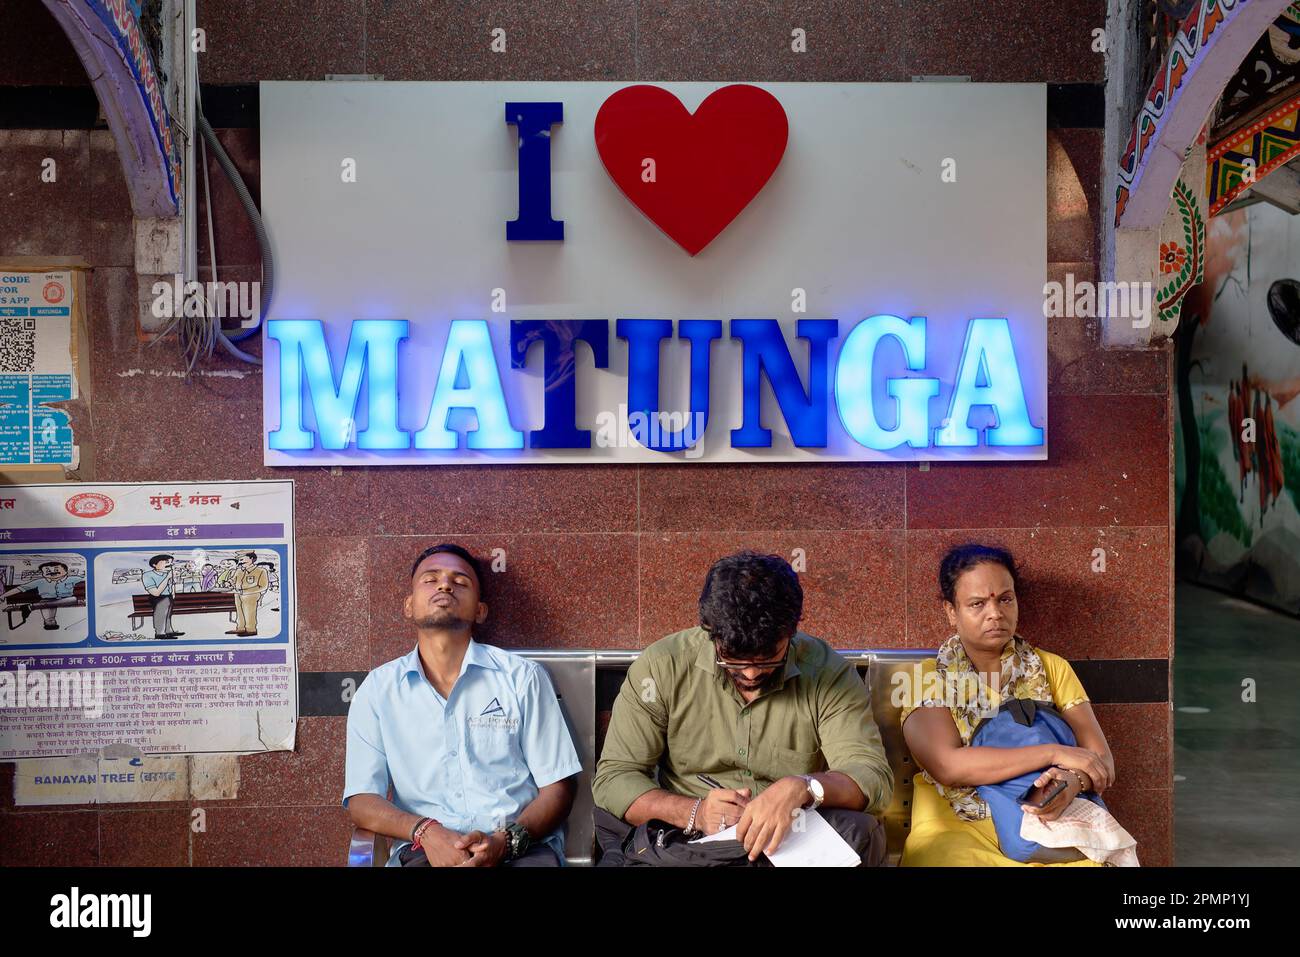 Three passengers sit on a bench at Matunga railway station (Central Railways) in Mumbai, India, under an illuminated neon sign saying 'I Love Matunga' Stock Photo